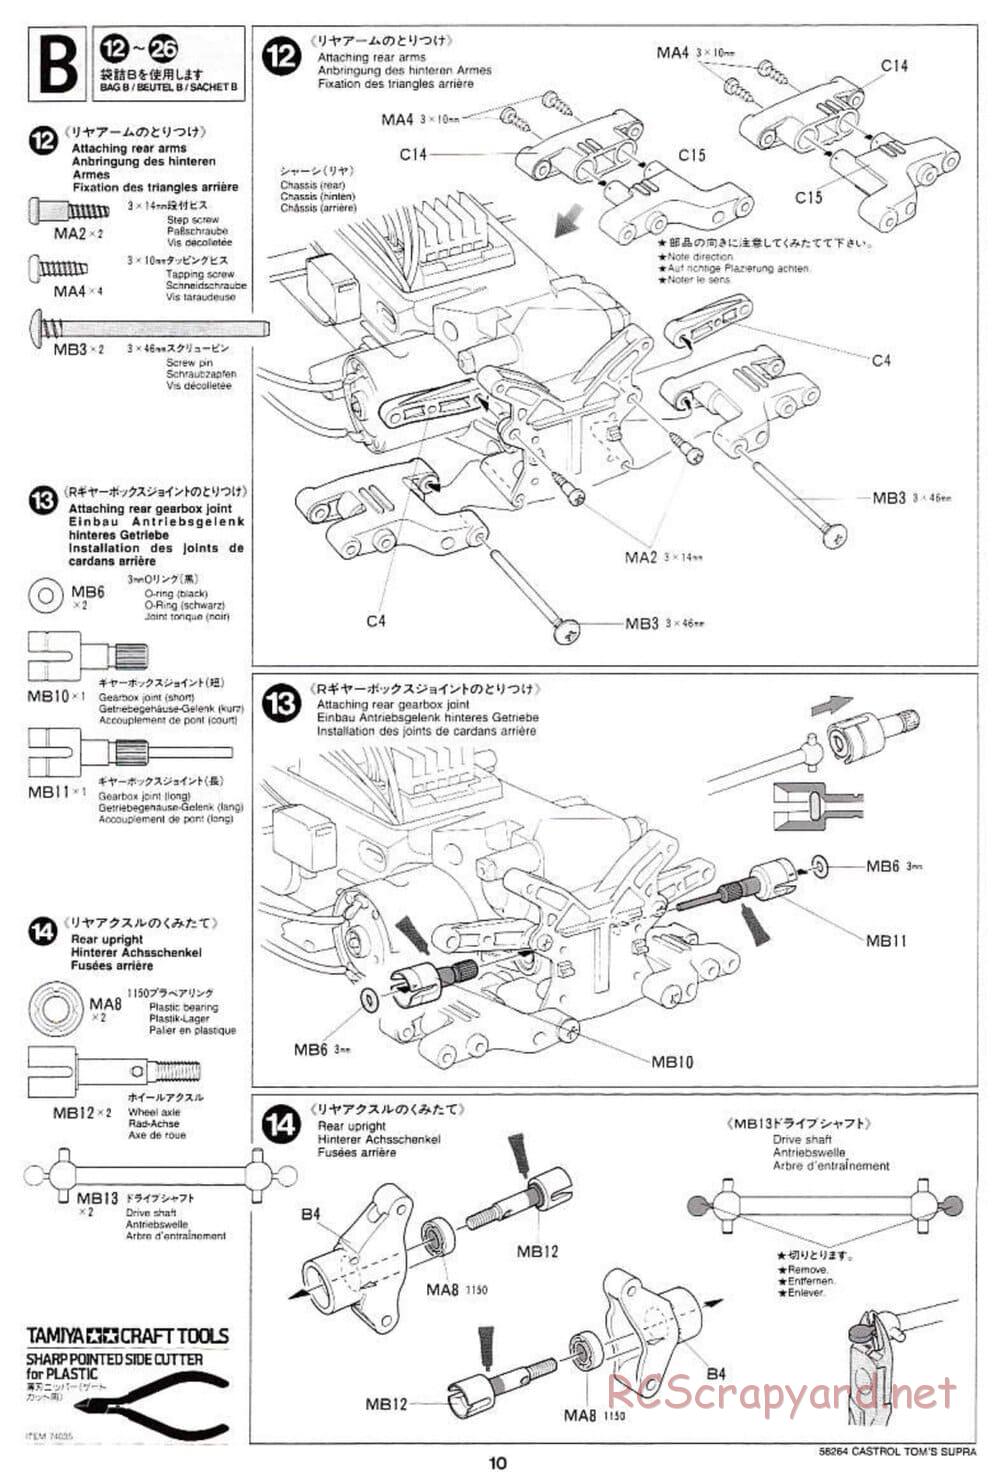 Tamiya - Castrol Tom's Supra 2000 - TL-01 Chassis - Manual - Page 10